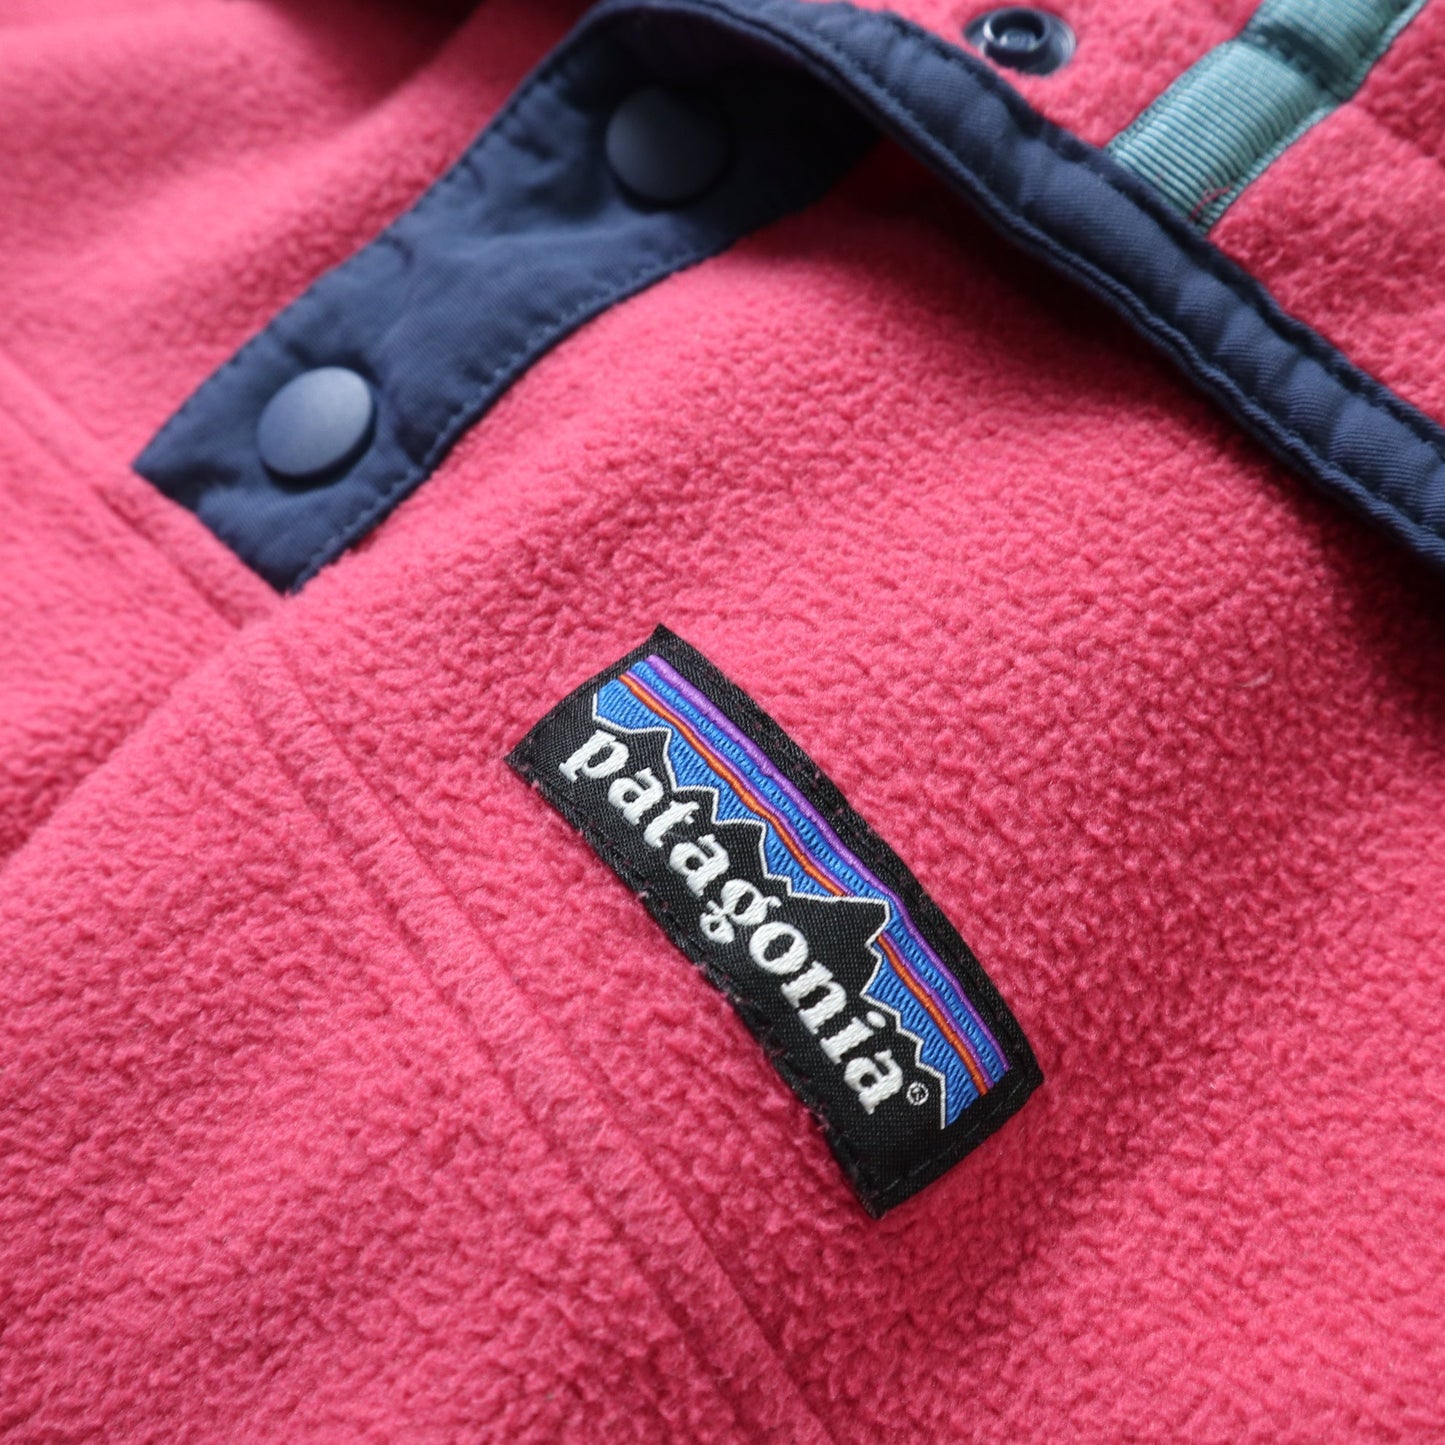 90s Patagonia orange pink fleece pullover fleece pullover